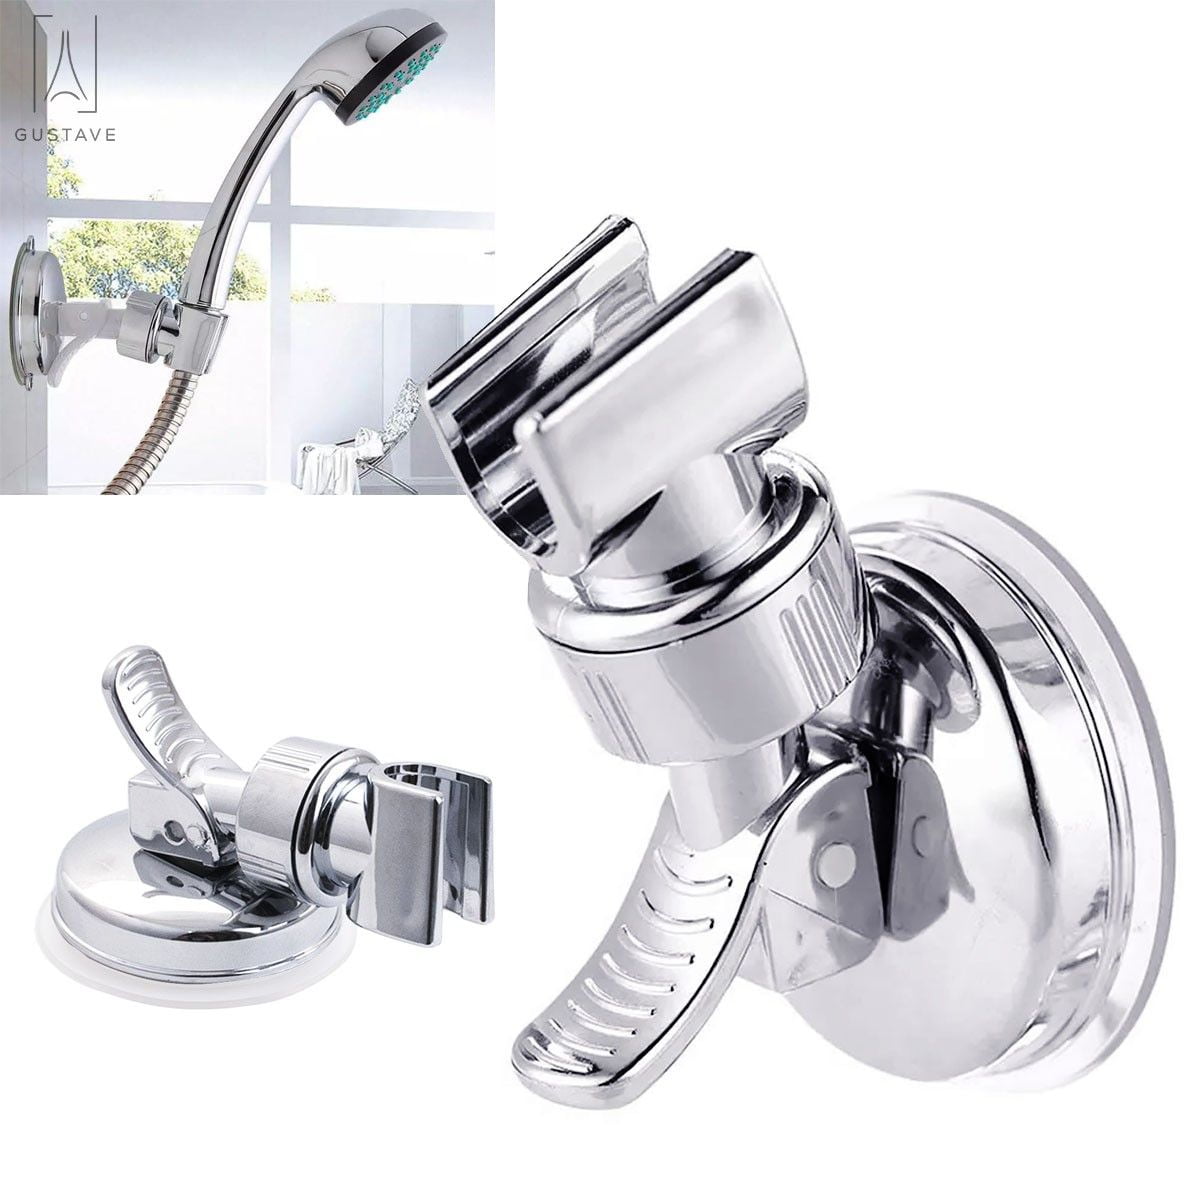 Adjustable Shower Head Handset Holder Chrome Bathroom Wall Mount Suction Bracket 